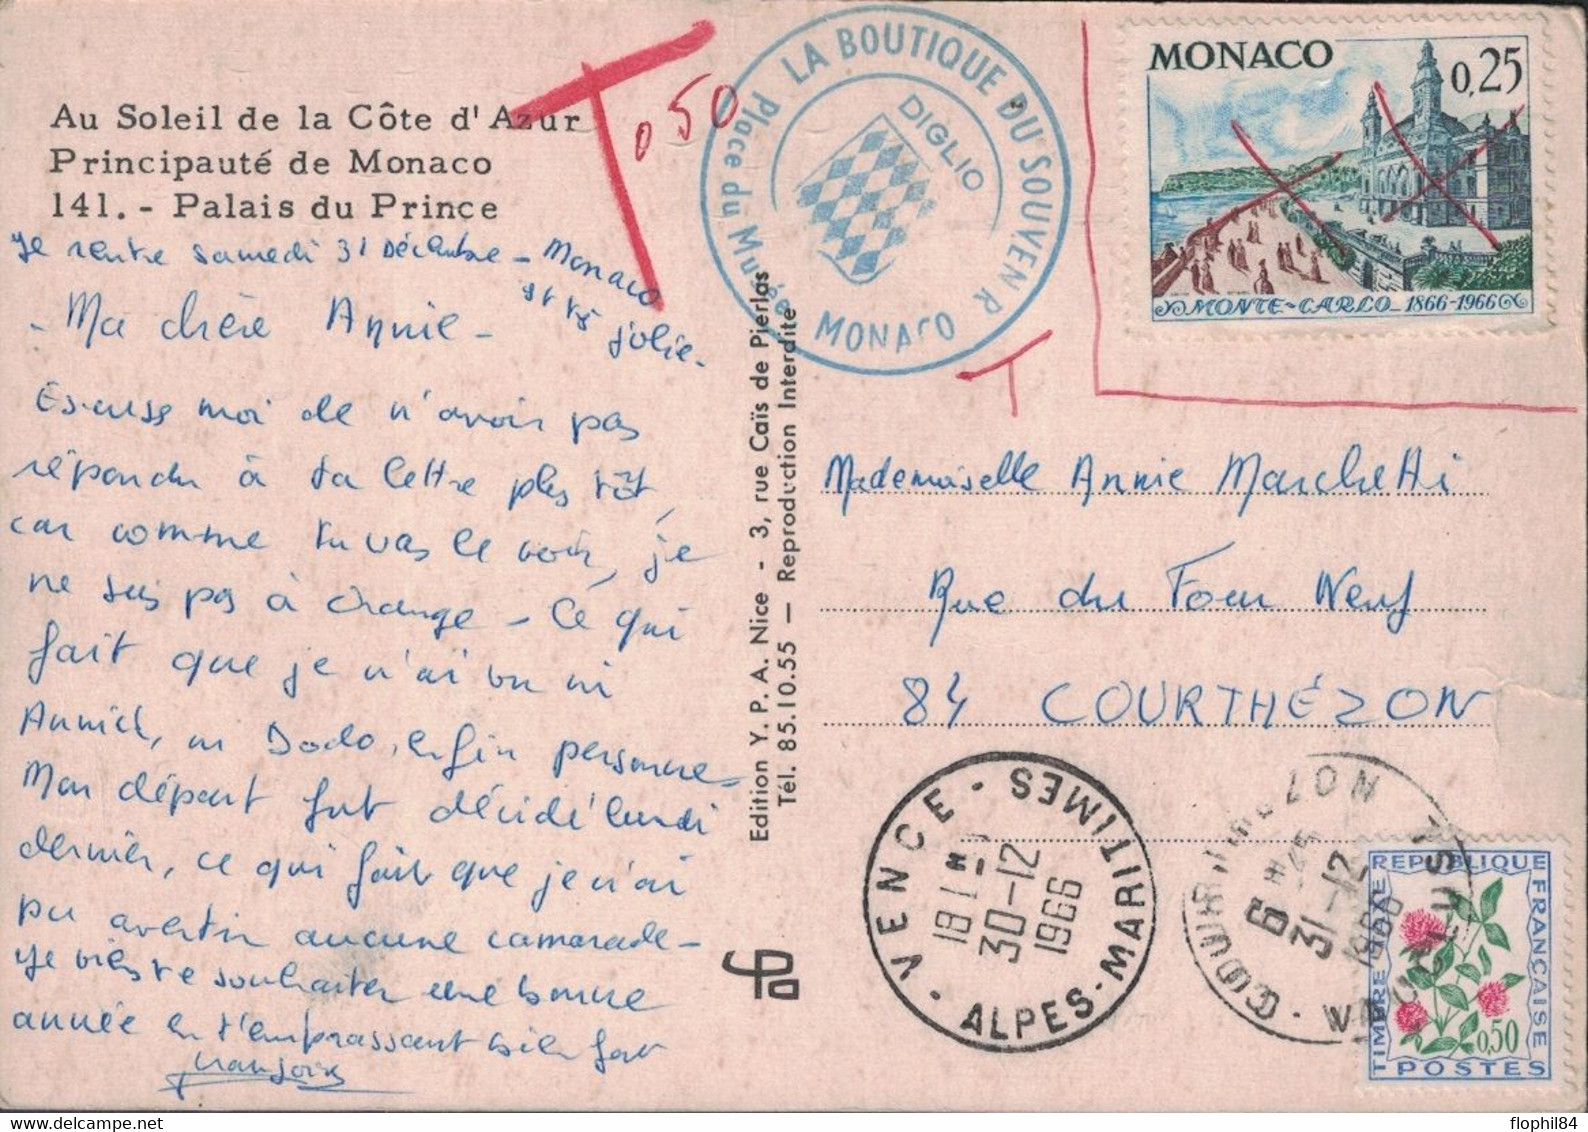 ALPES MARITIMES - VENCE - TIMBRE DE MONACO - NON ACCEPTE AVEC T DE TAXE - TAXE A COURTHEZON - VAUCLUSE - 1859-1959 Covers & Documents